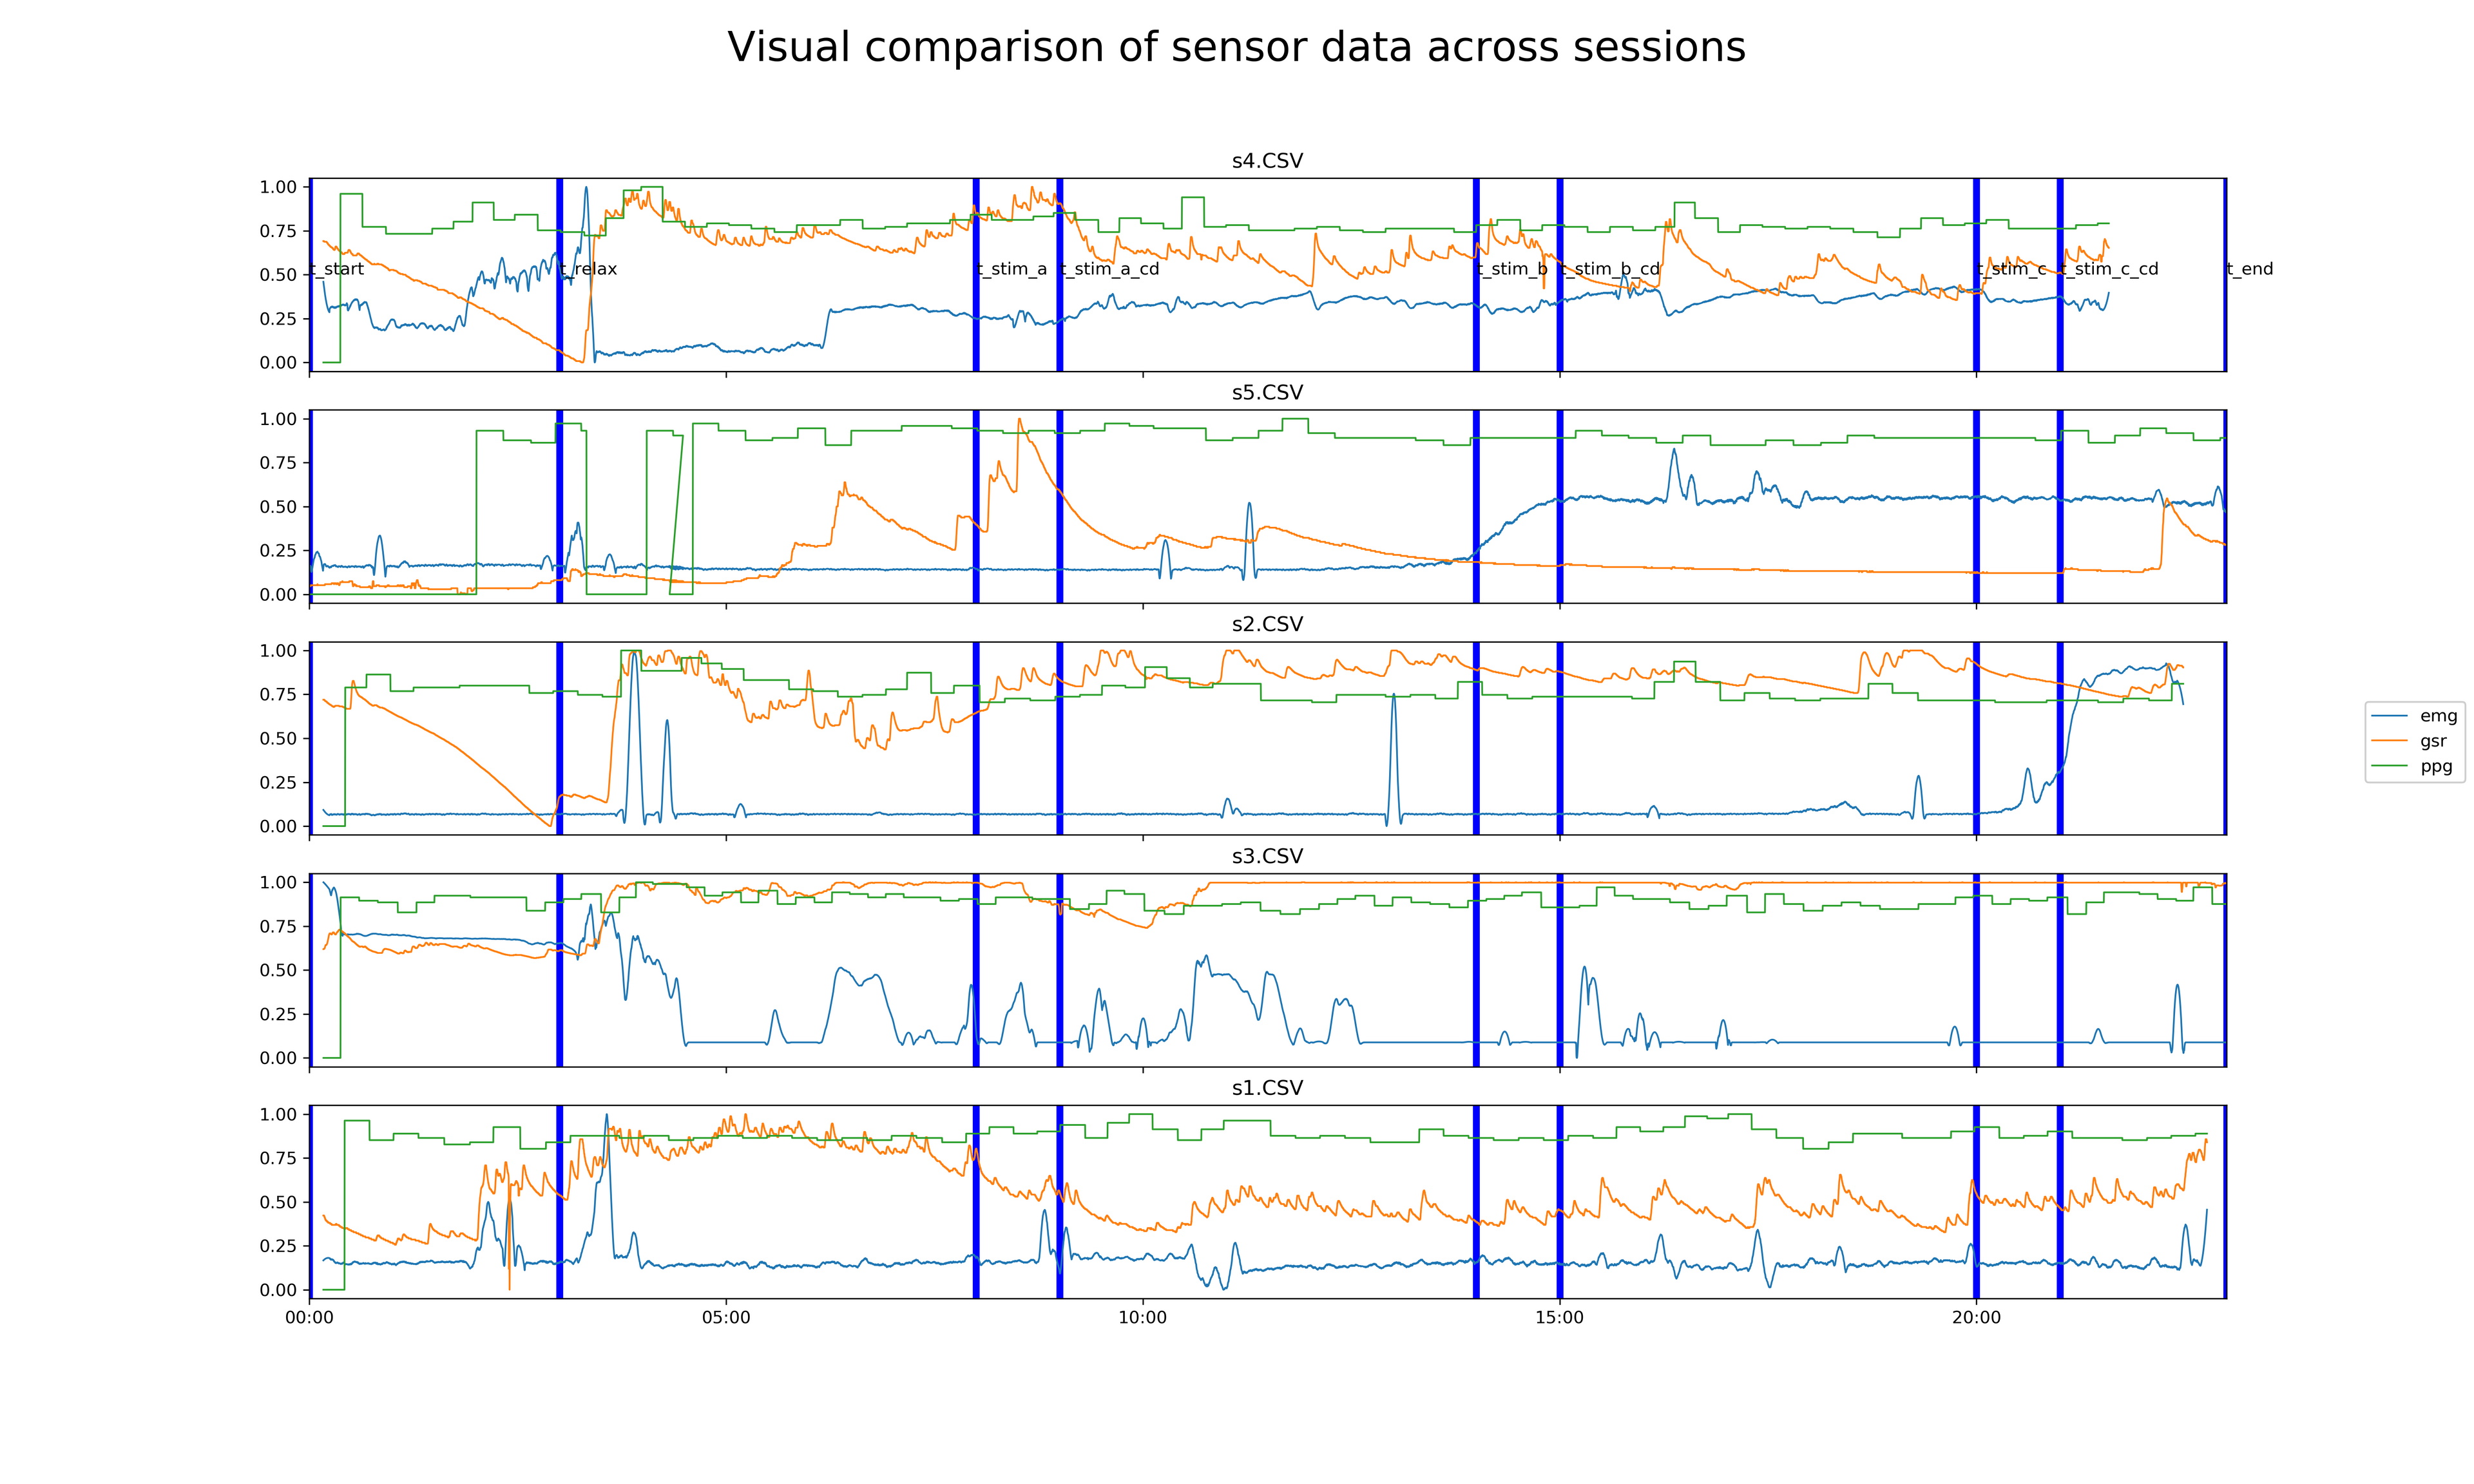 Visual comparison of sensor data across experiments